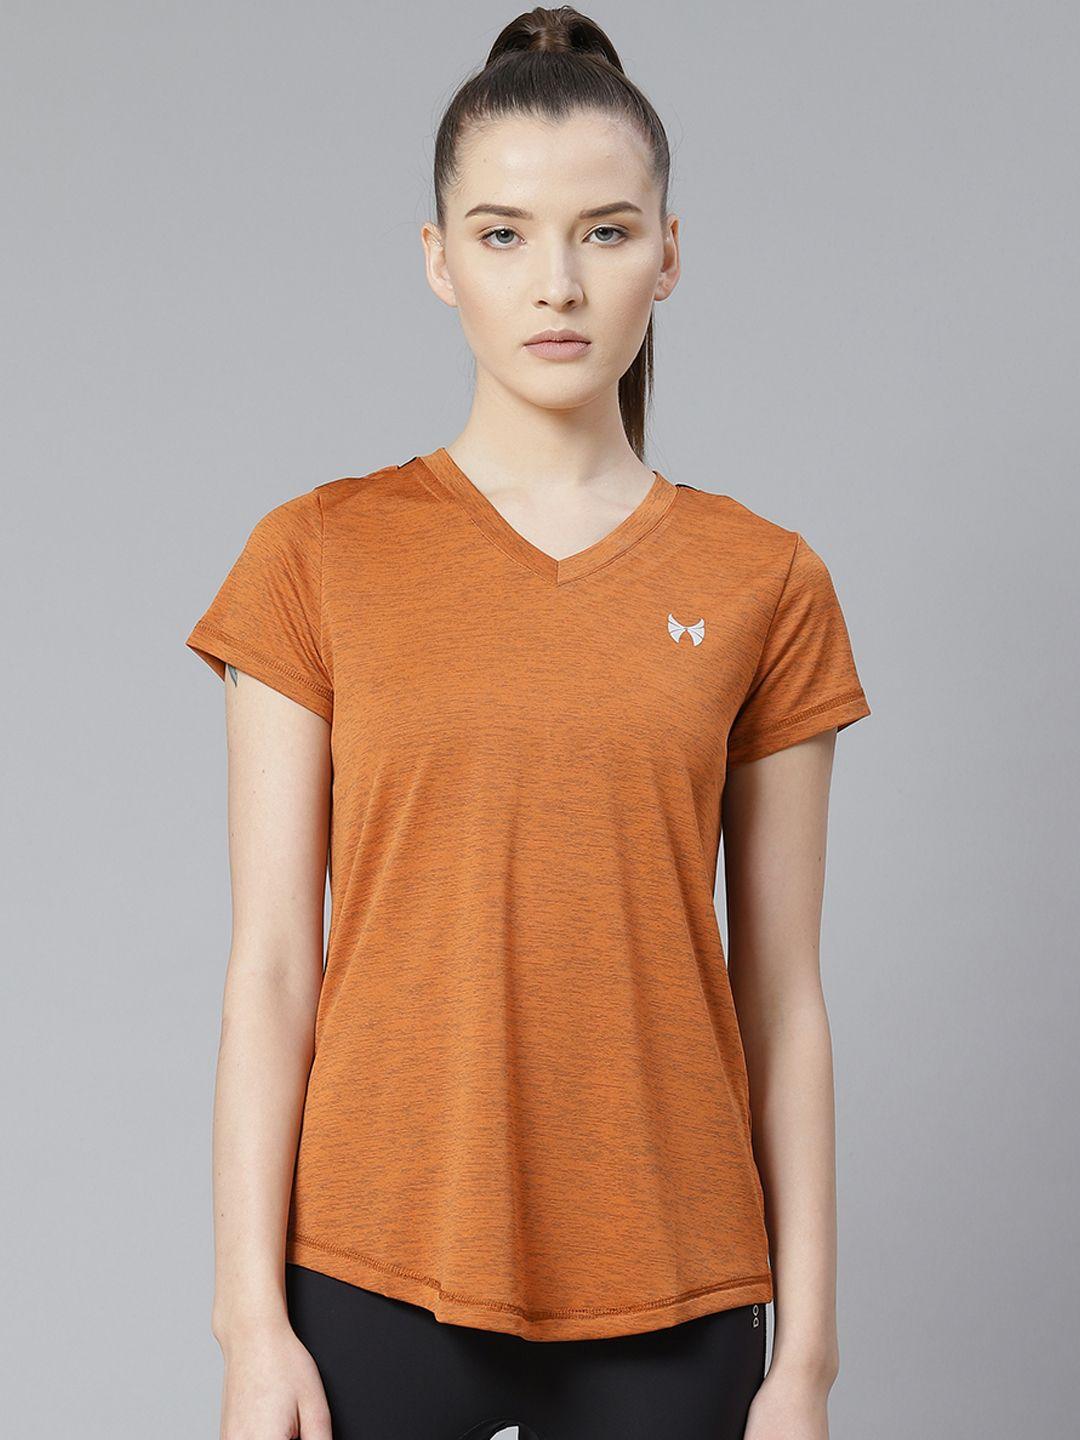 skyria women rust orange self design v-neck sports t-shirt